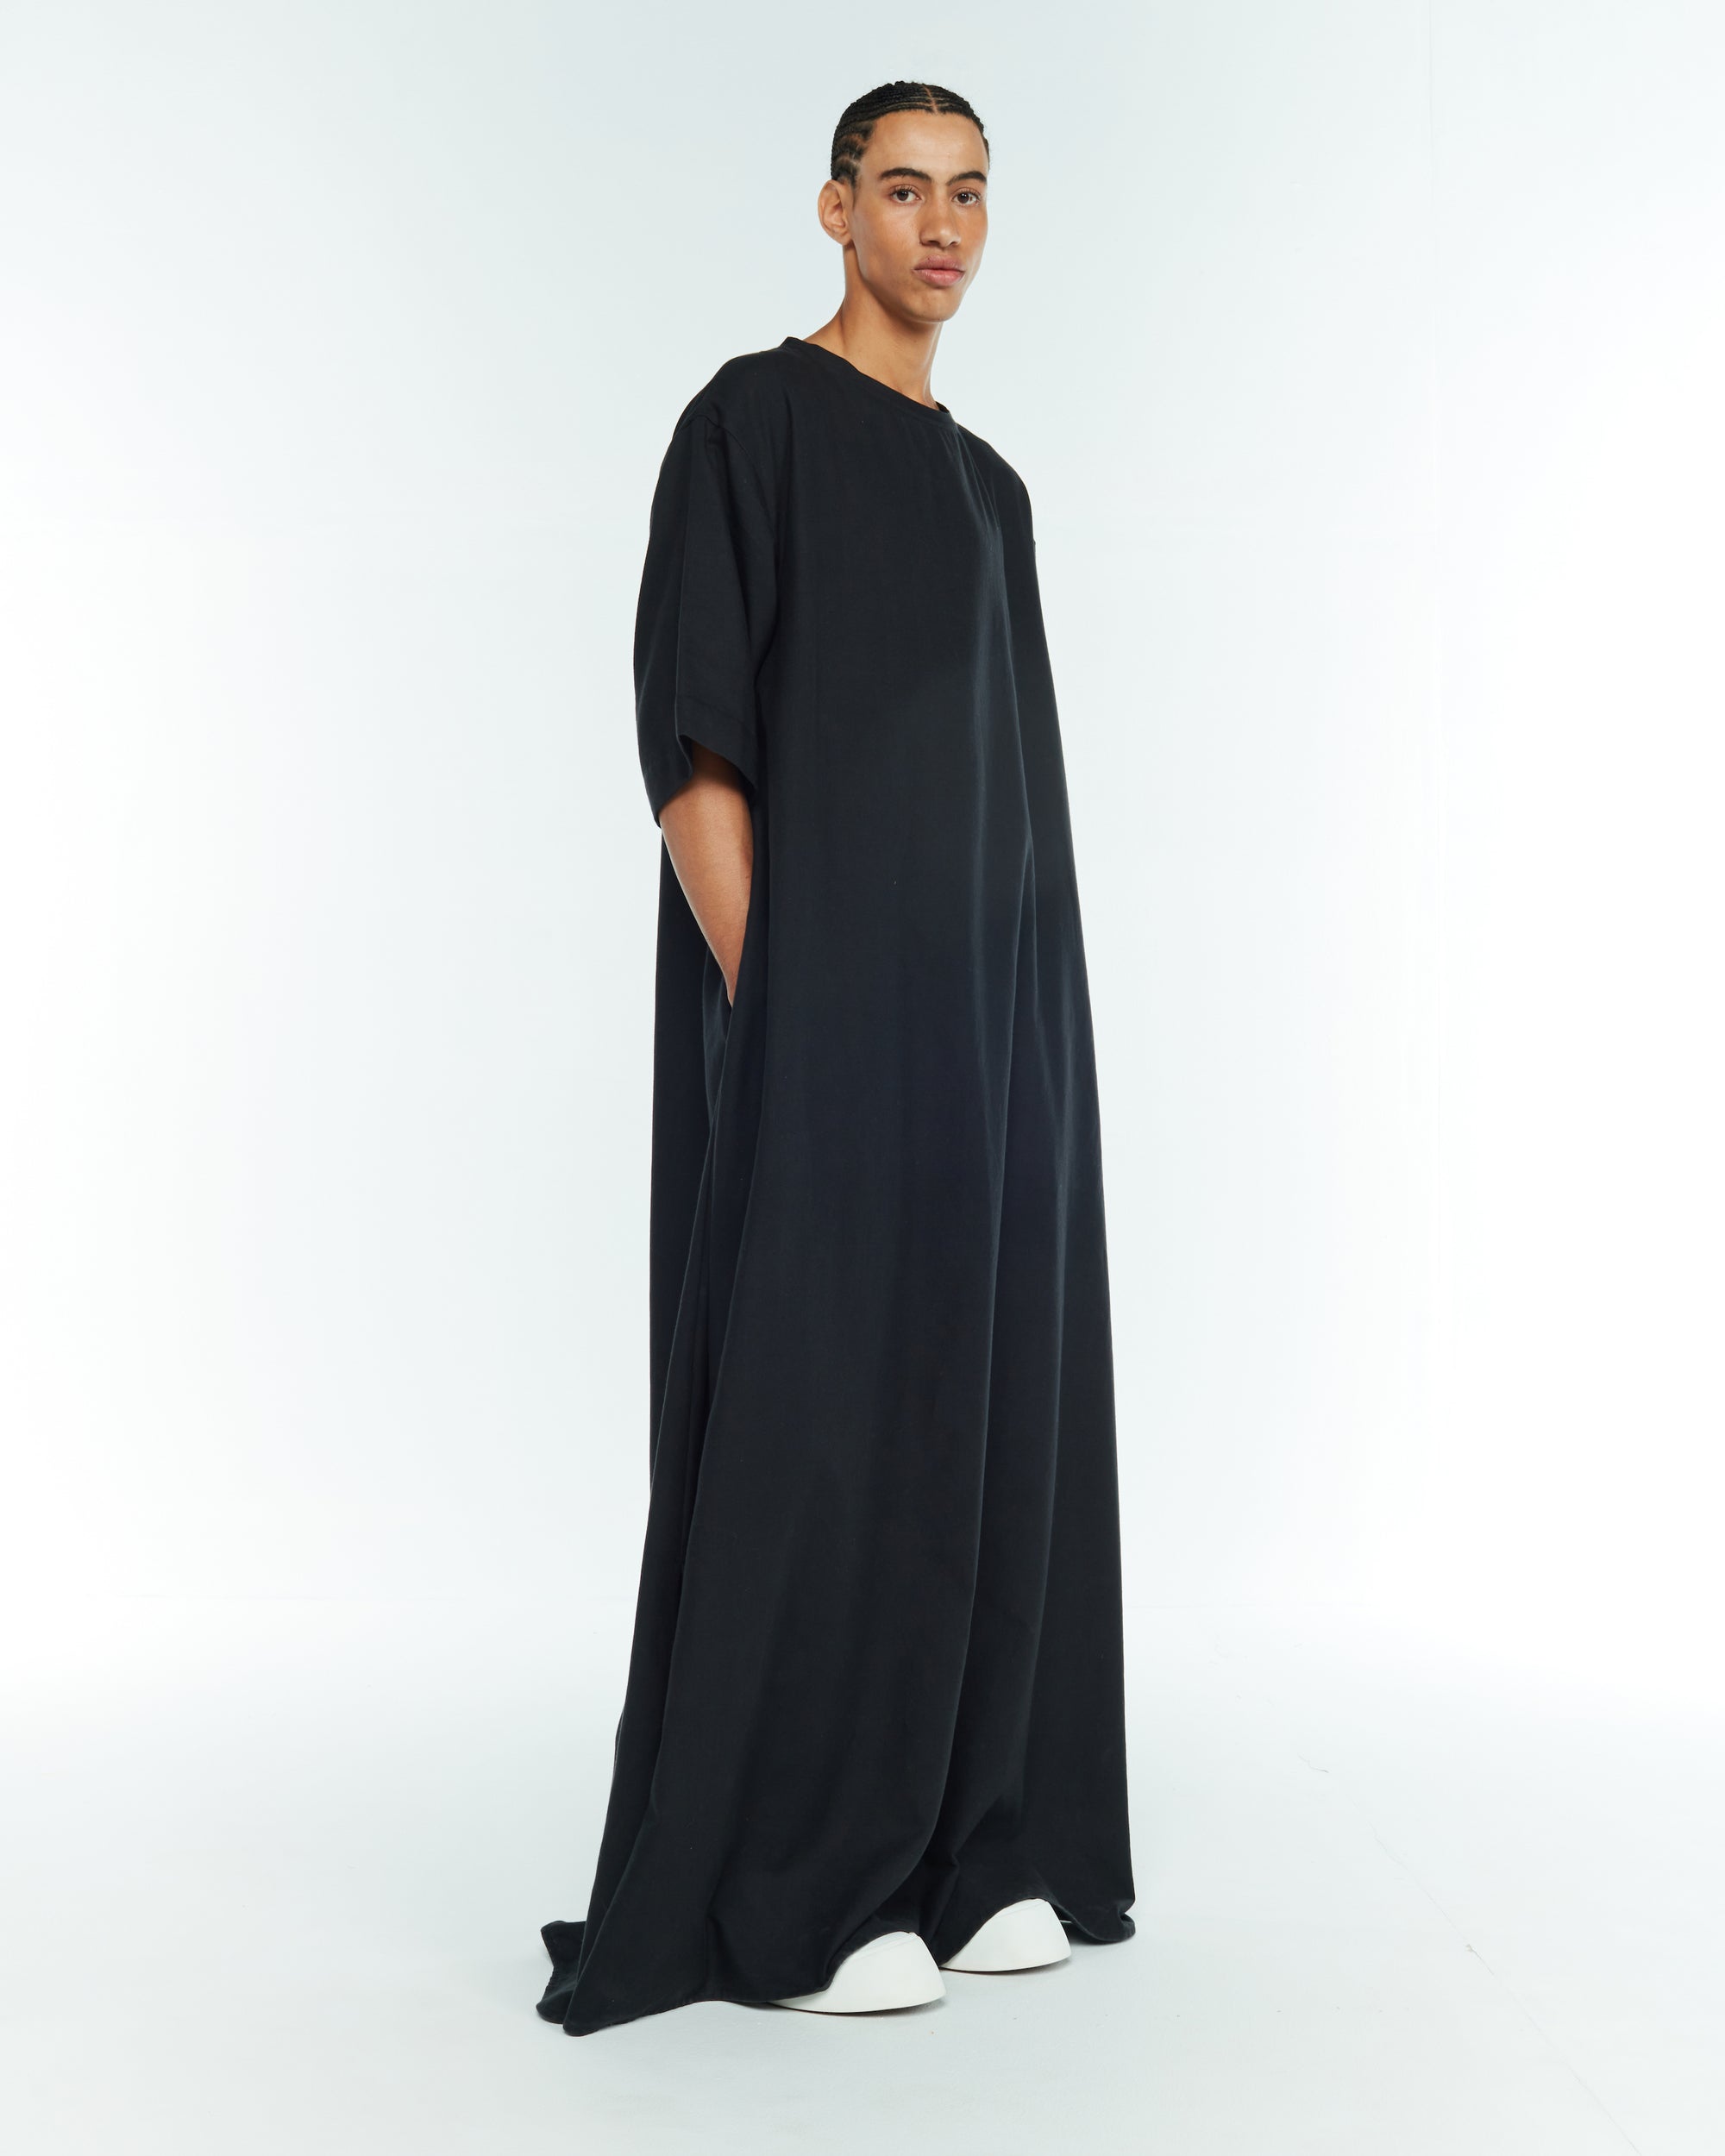 T-SHIRT DRESS : BLACK